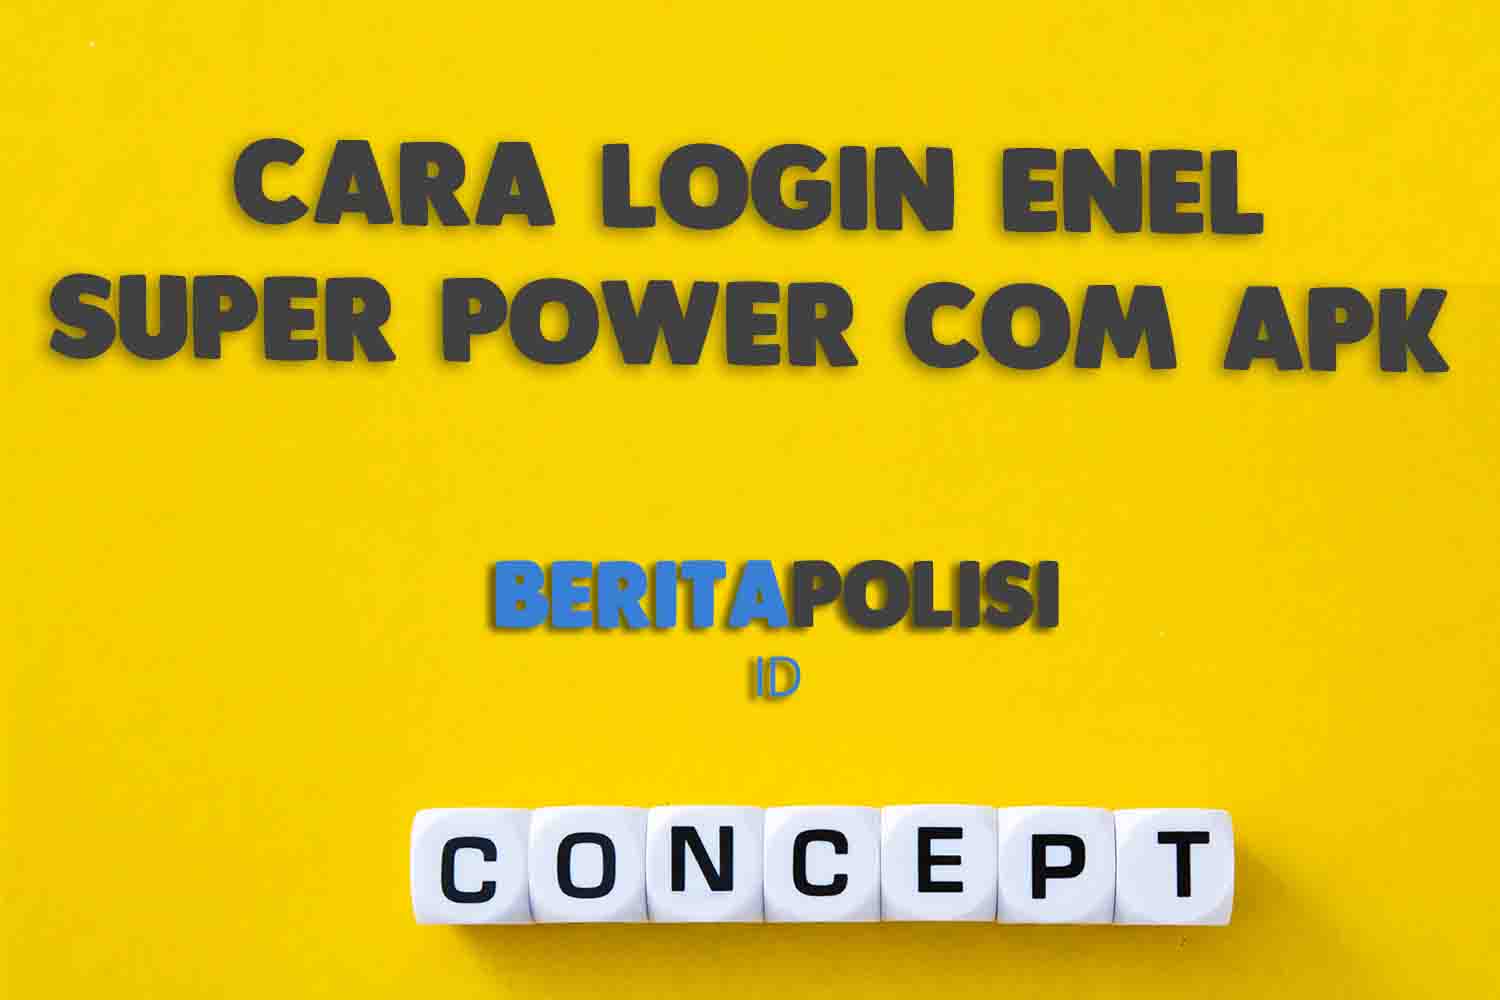 Cara Login Enel Super Power Com Apk